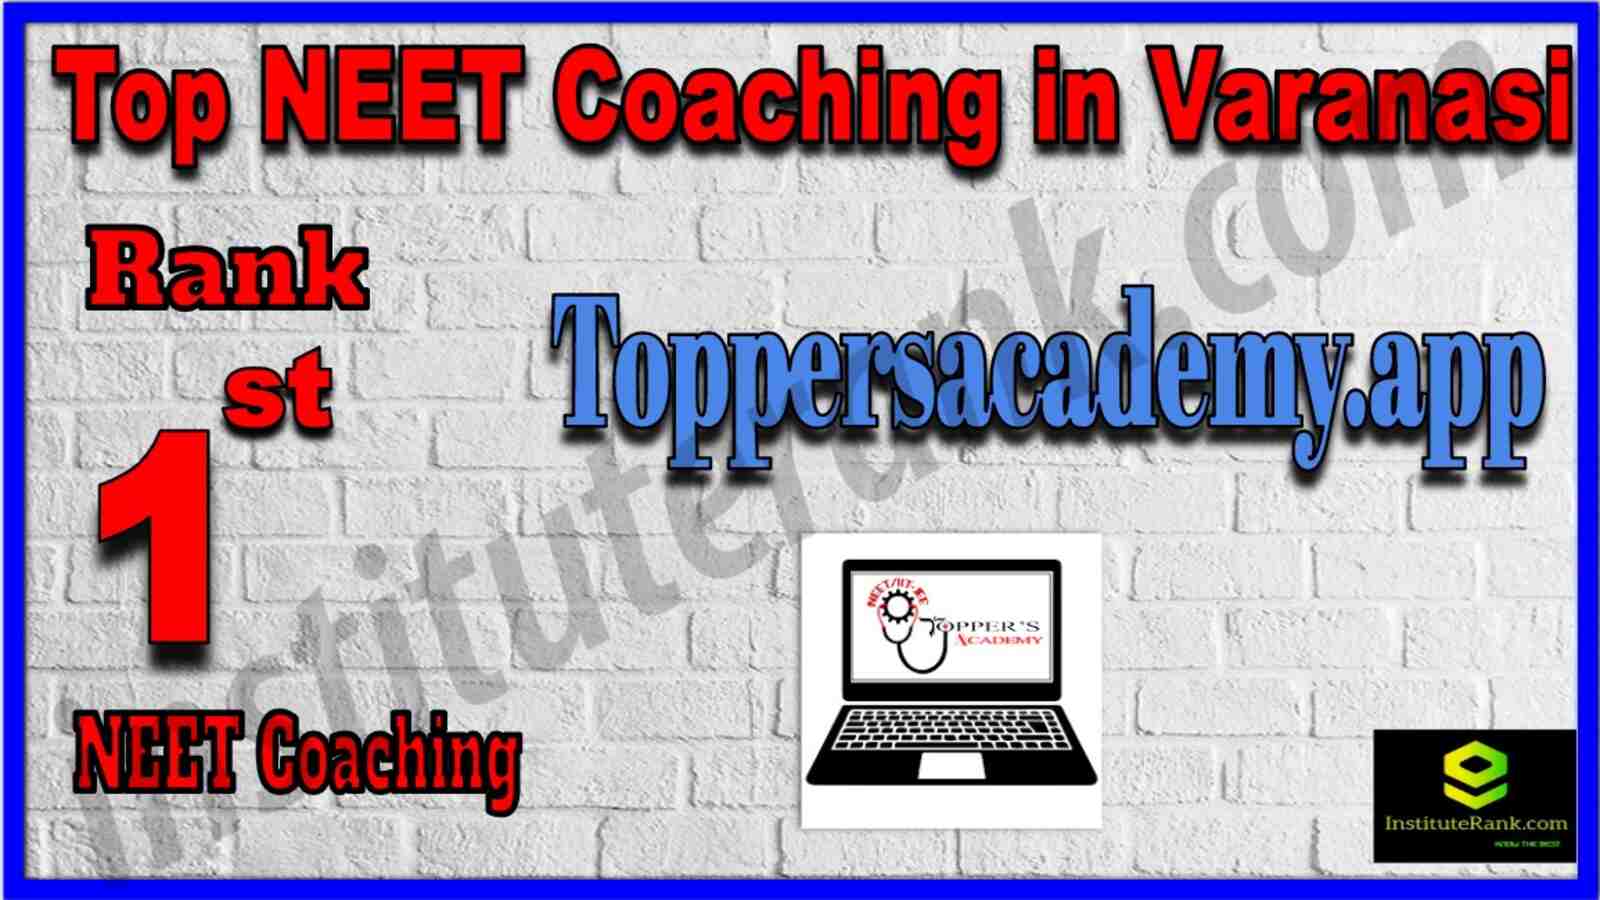 Rank 1 Top NEET Coaching in Varanasi